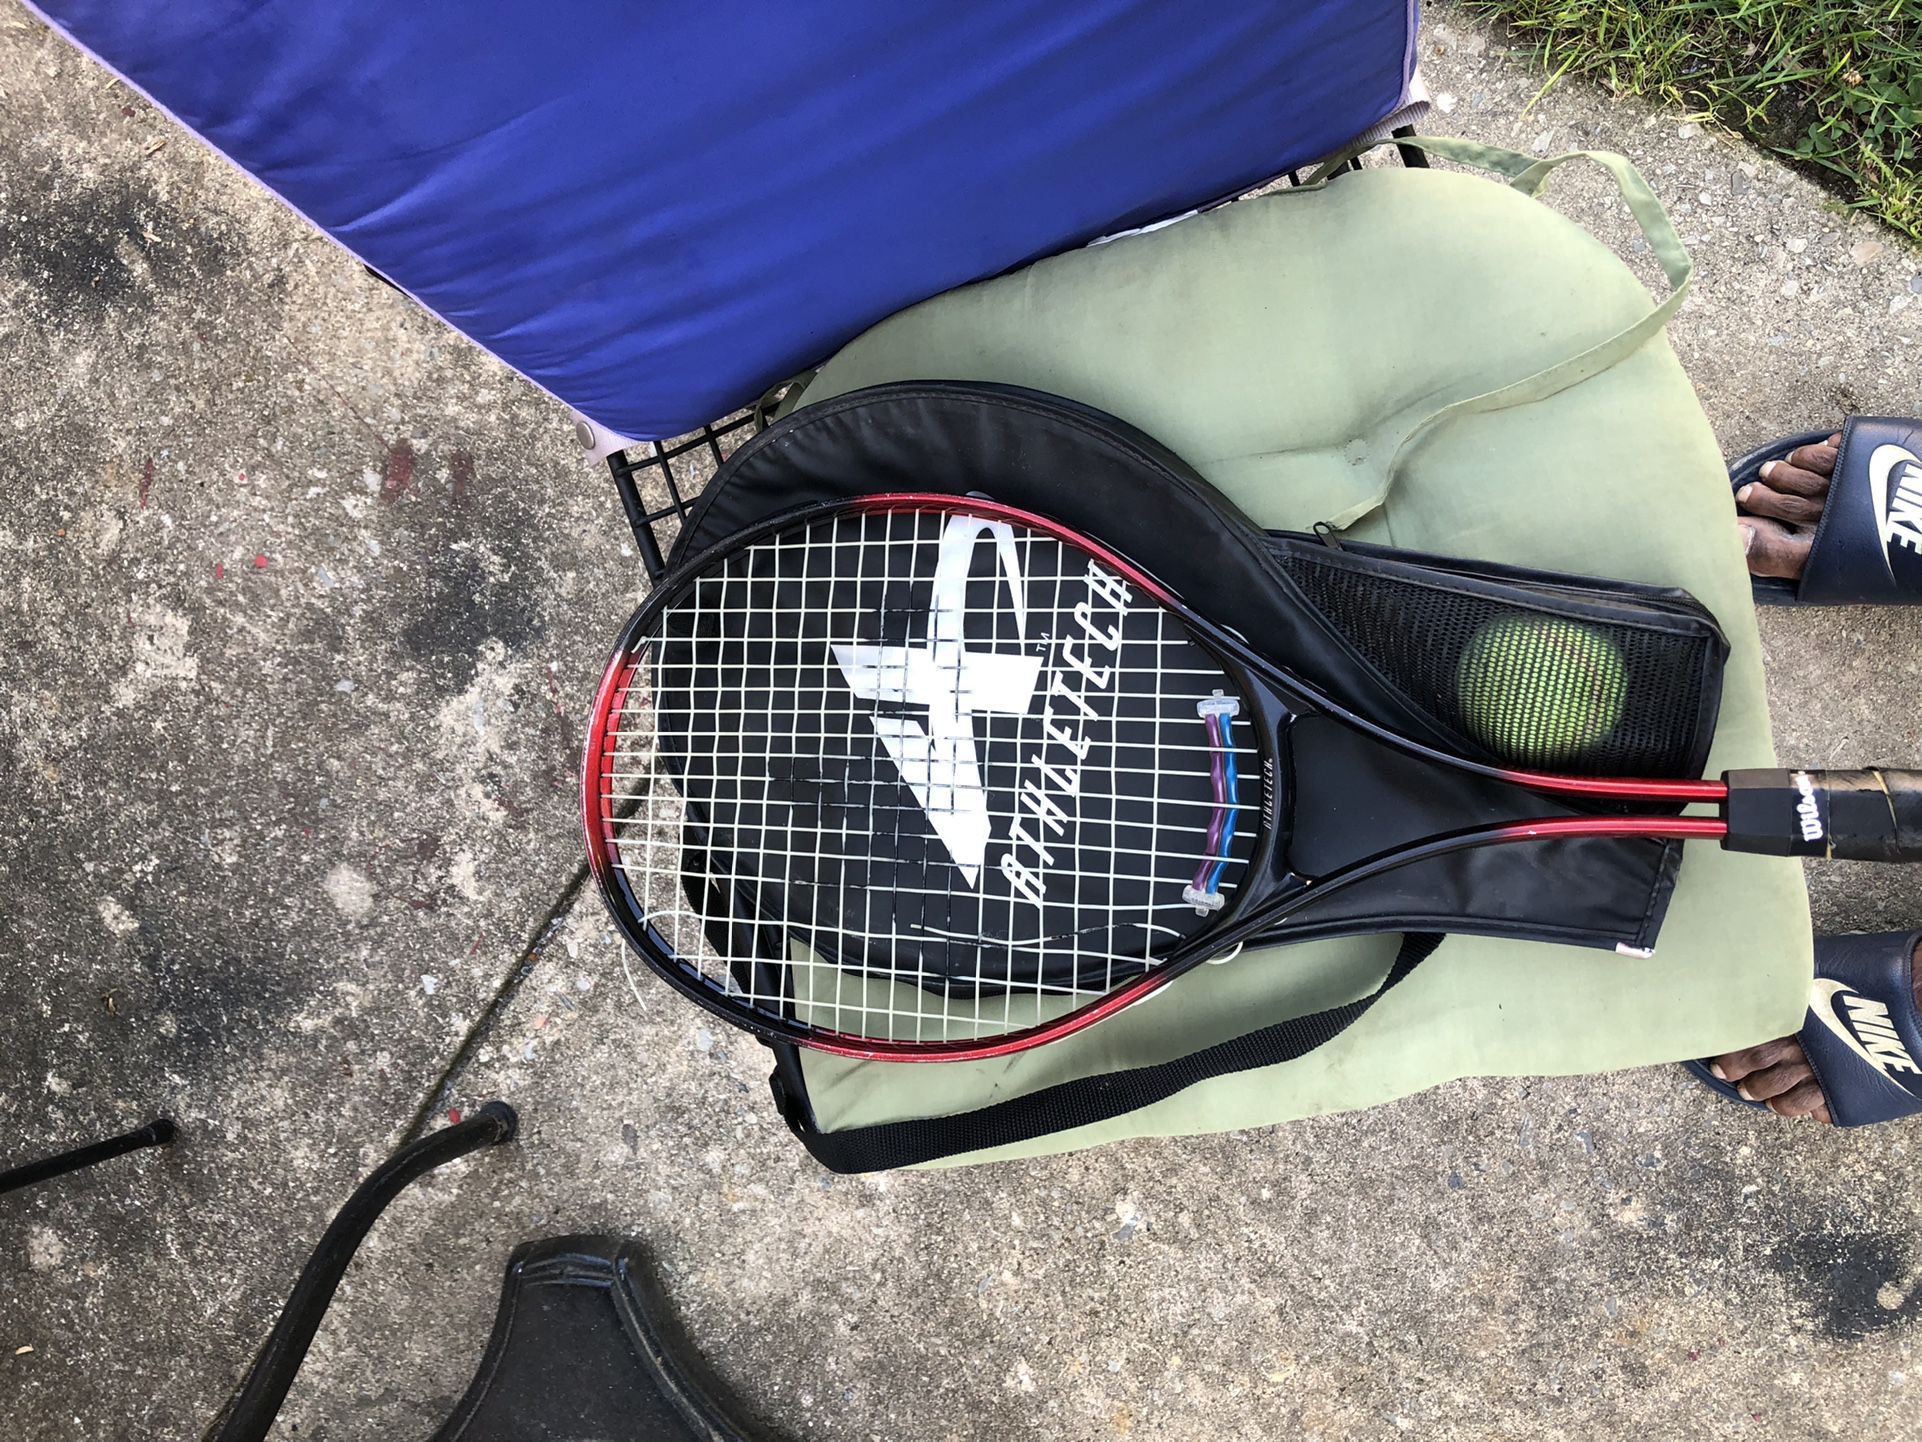 Used tennis rackets